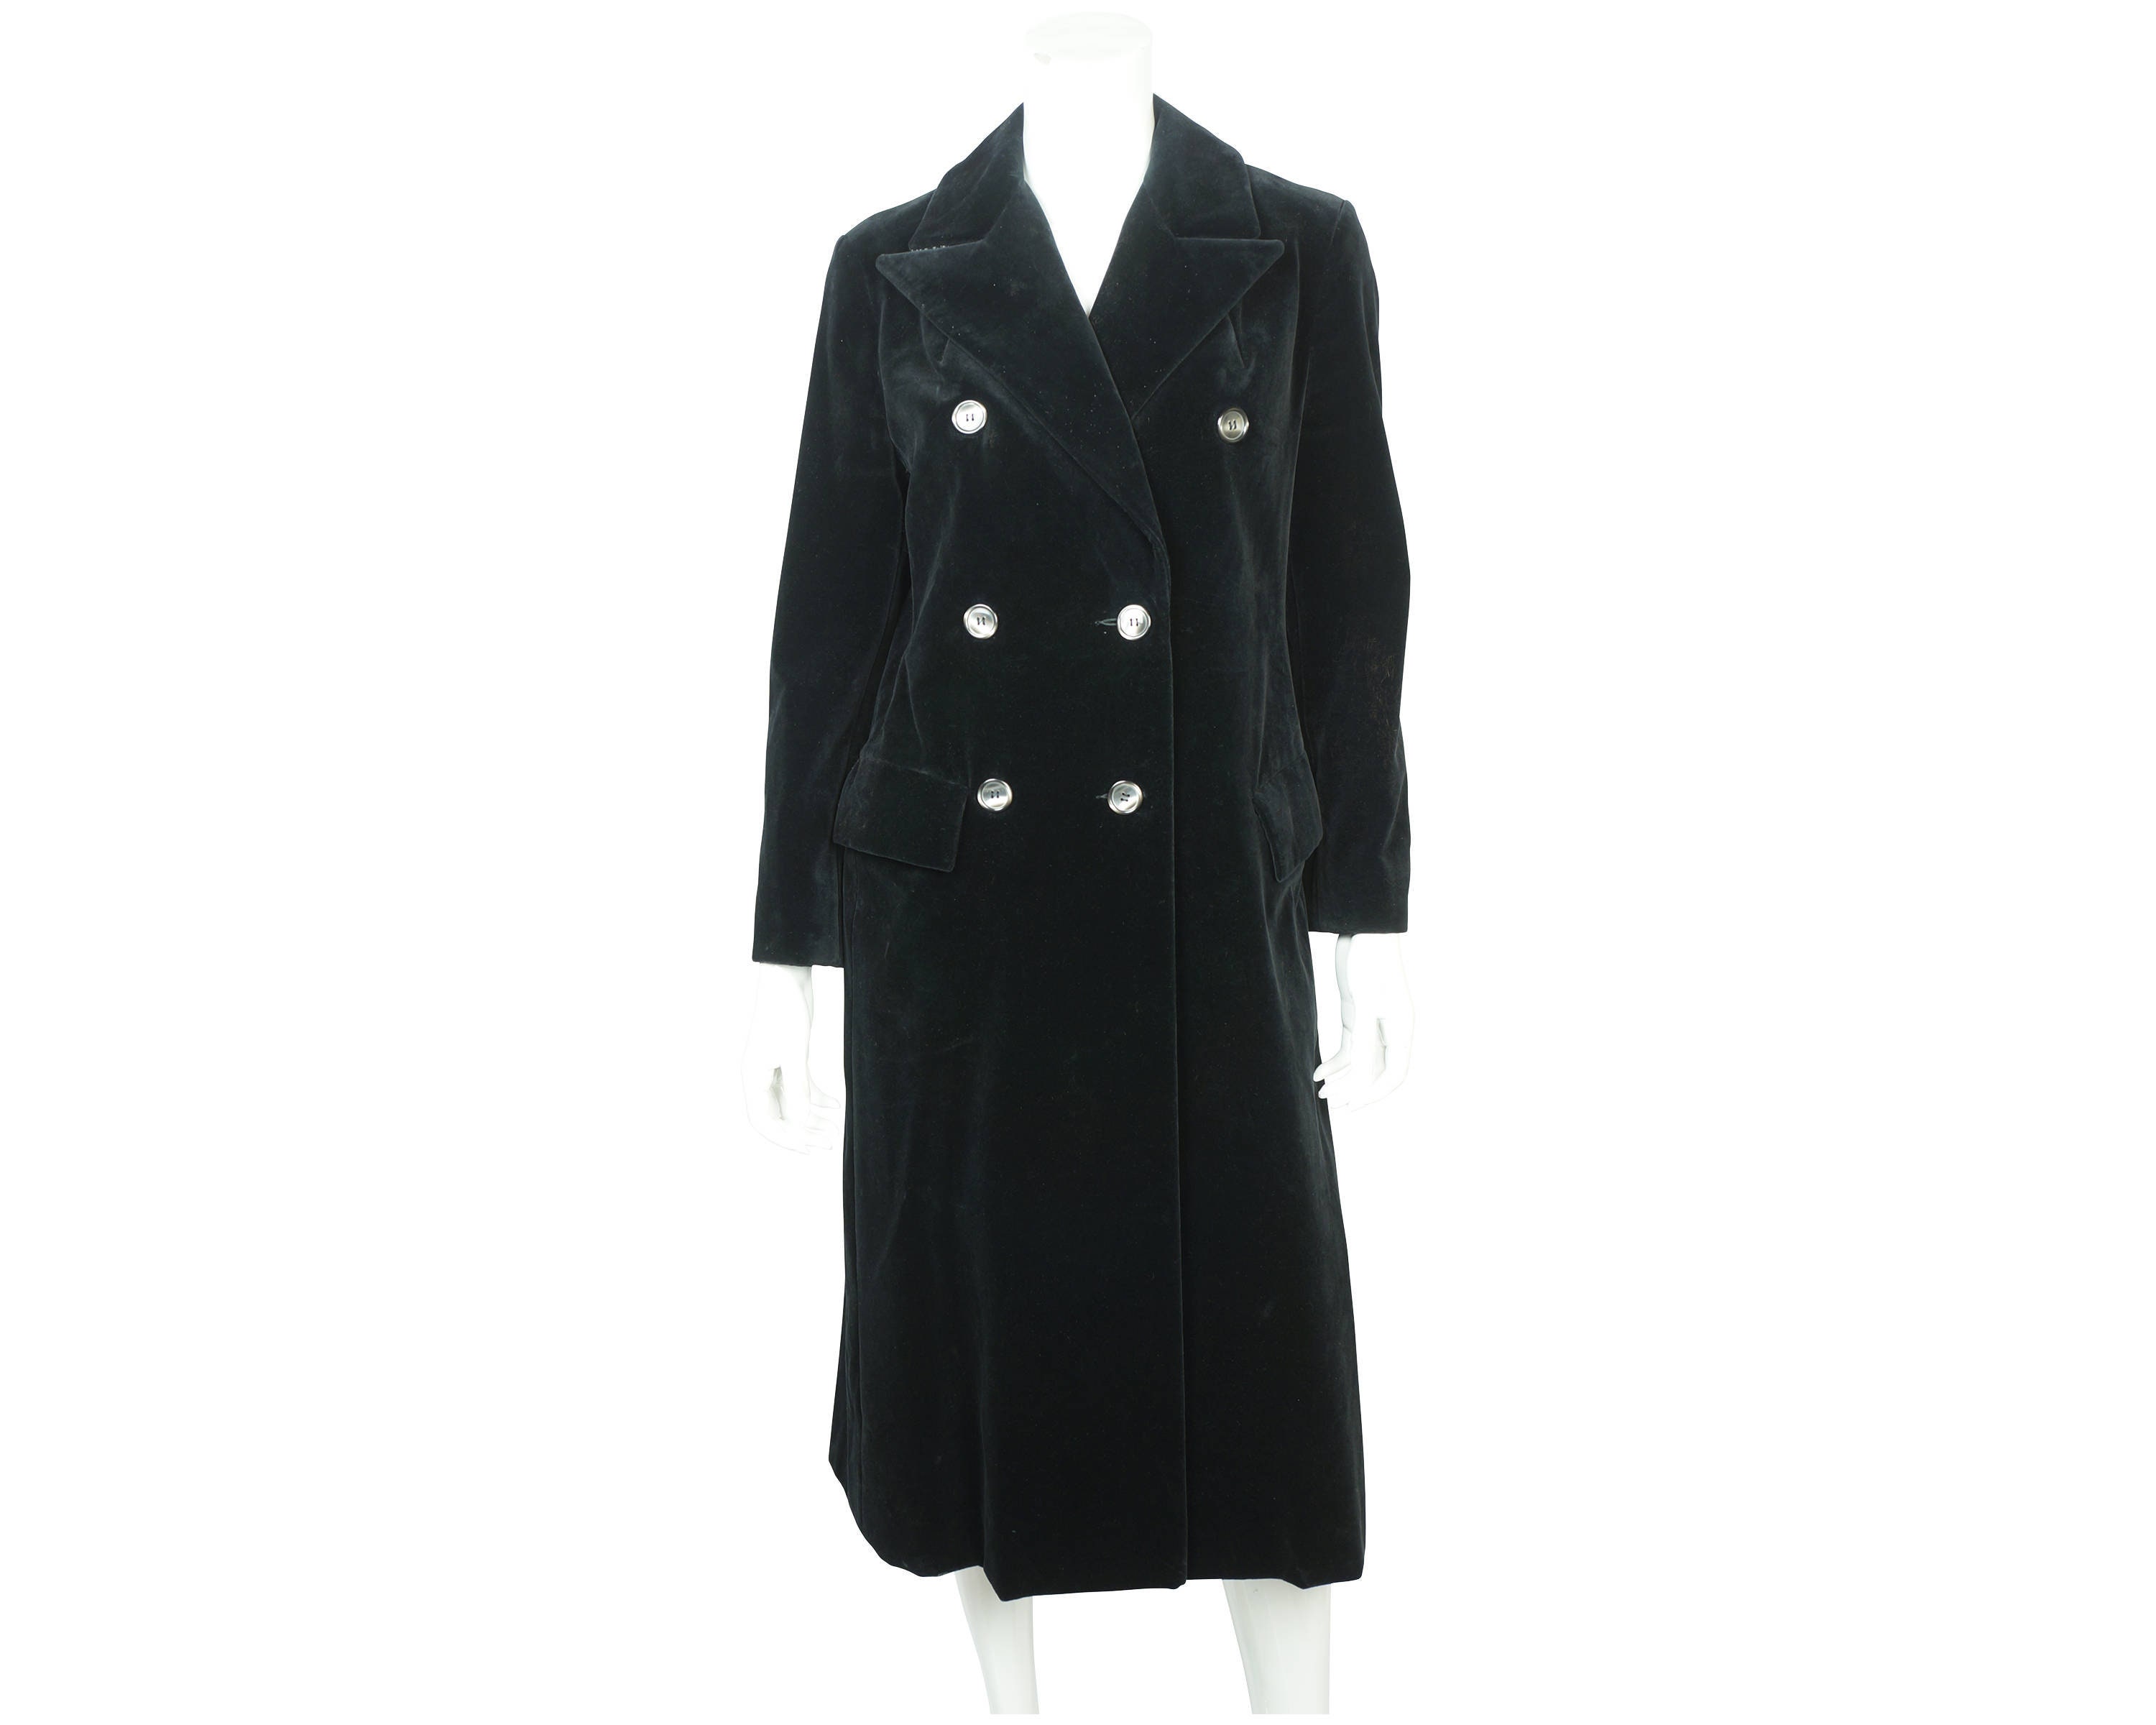 Vintage 70s Marielle Fleury Black Velvet Coat by Rainmaster - Etsy ...